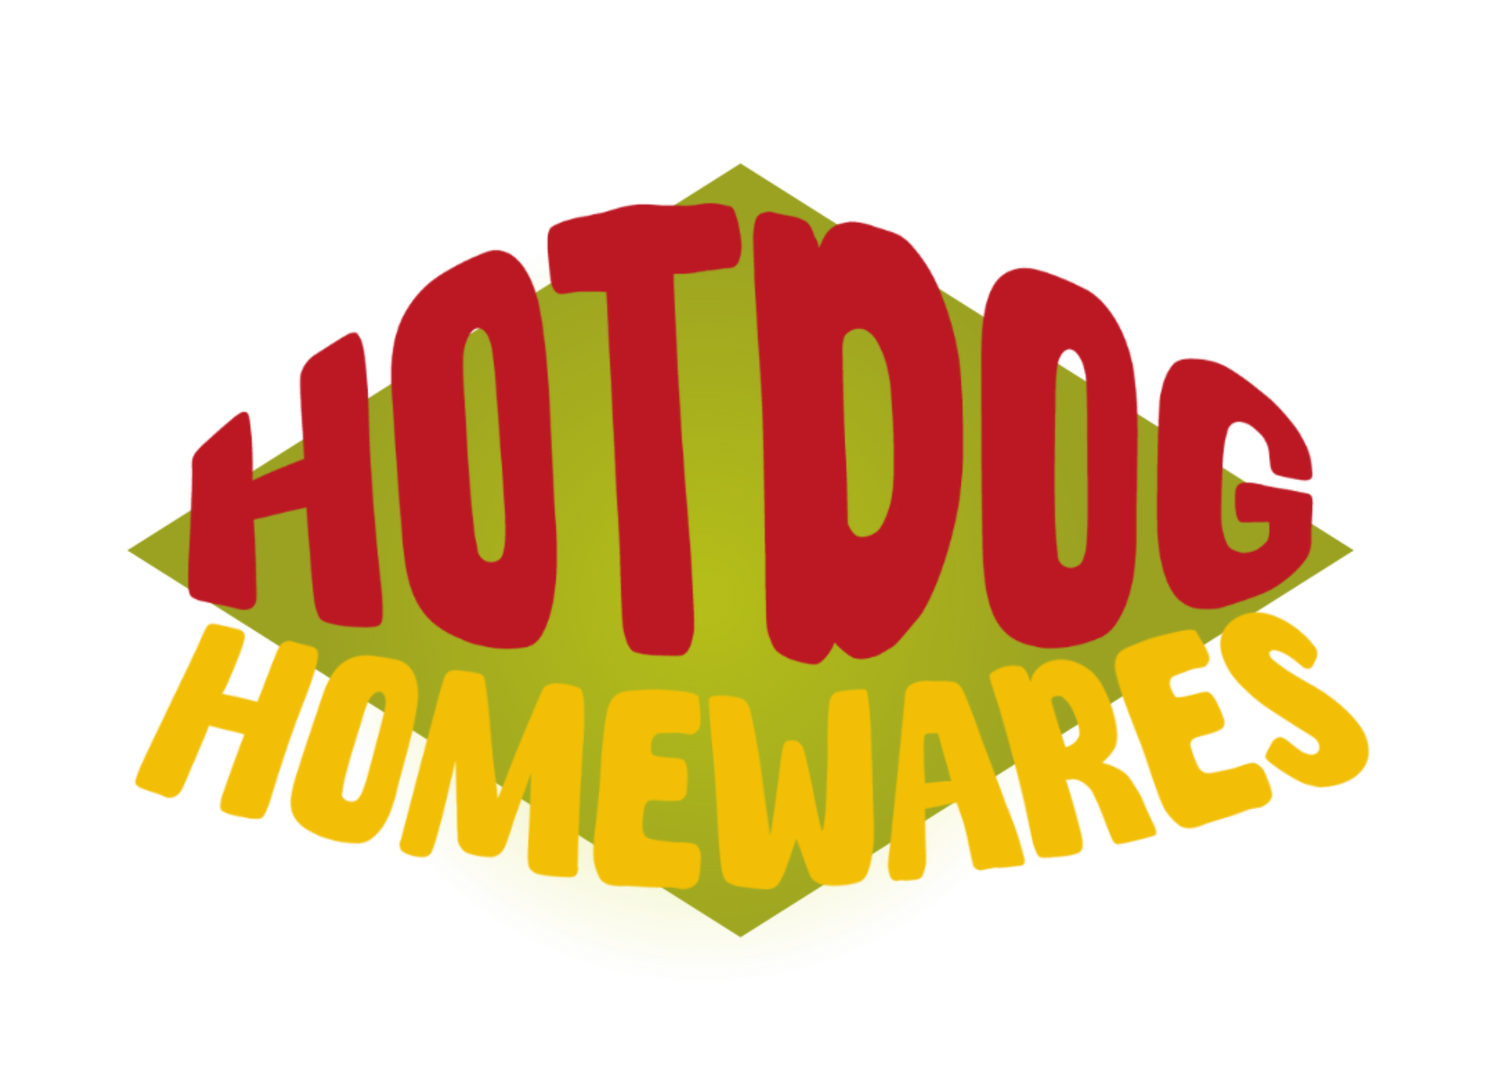 hotdog homewares